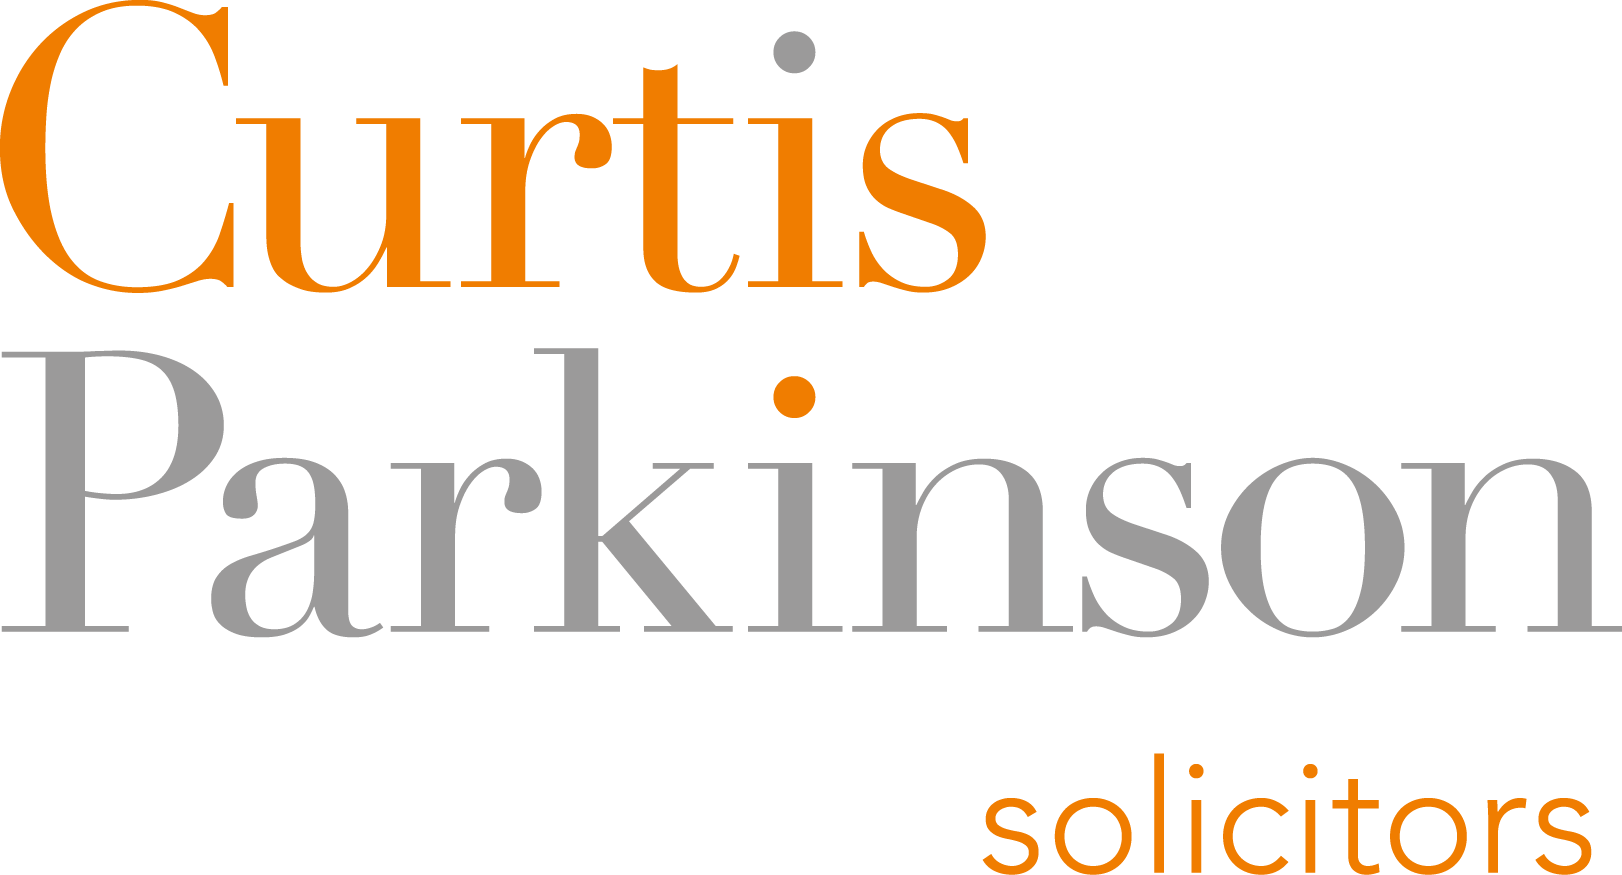 Curtis Parkinson logo